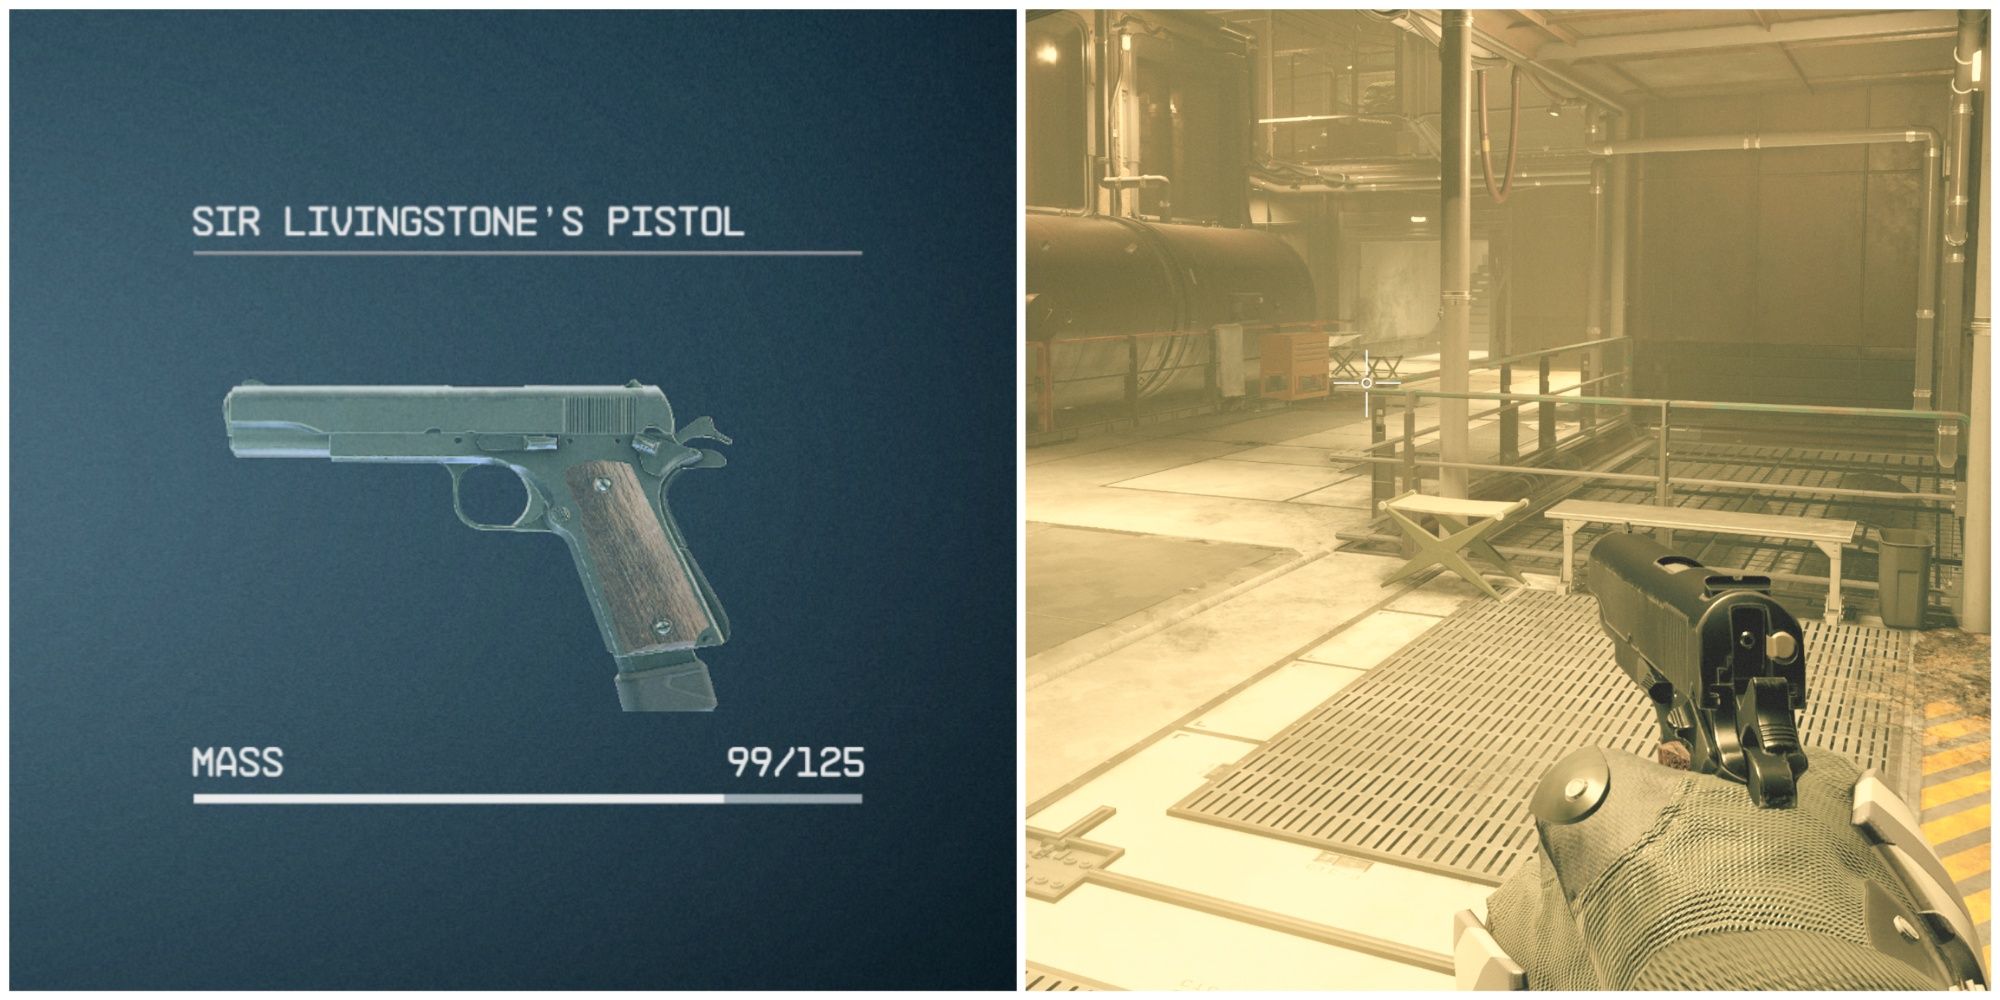 sir livingstone's pistol equipped